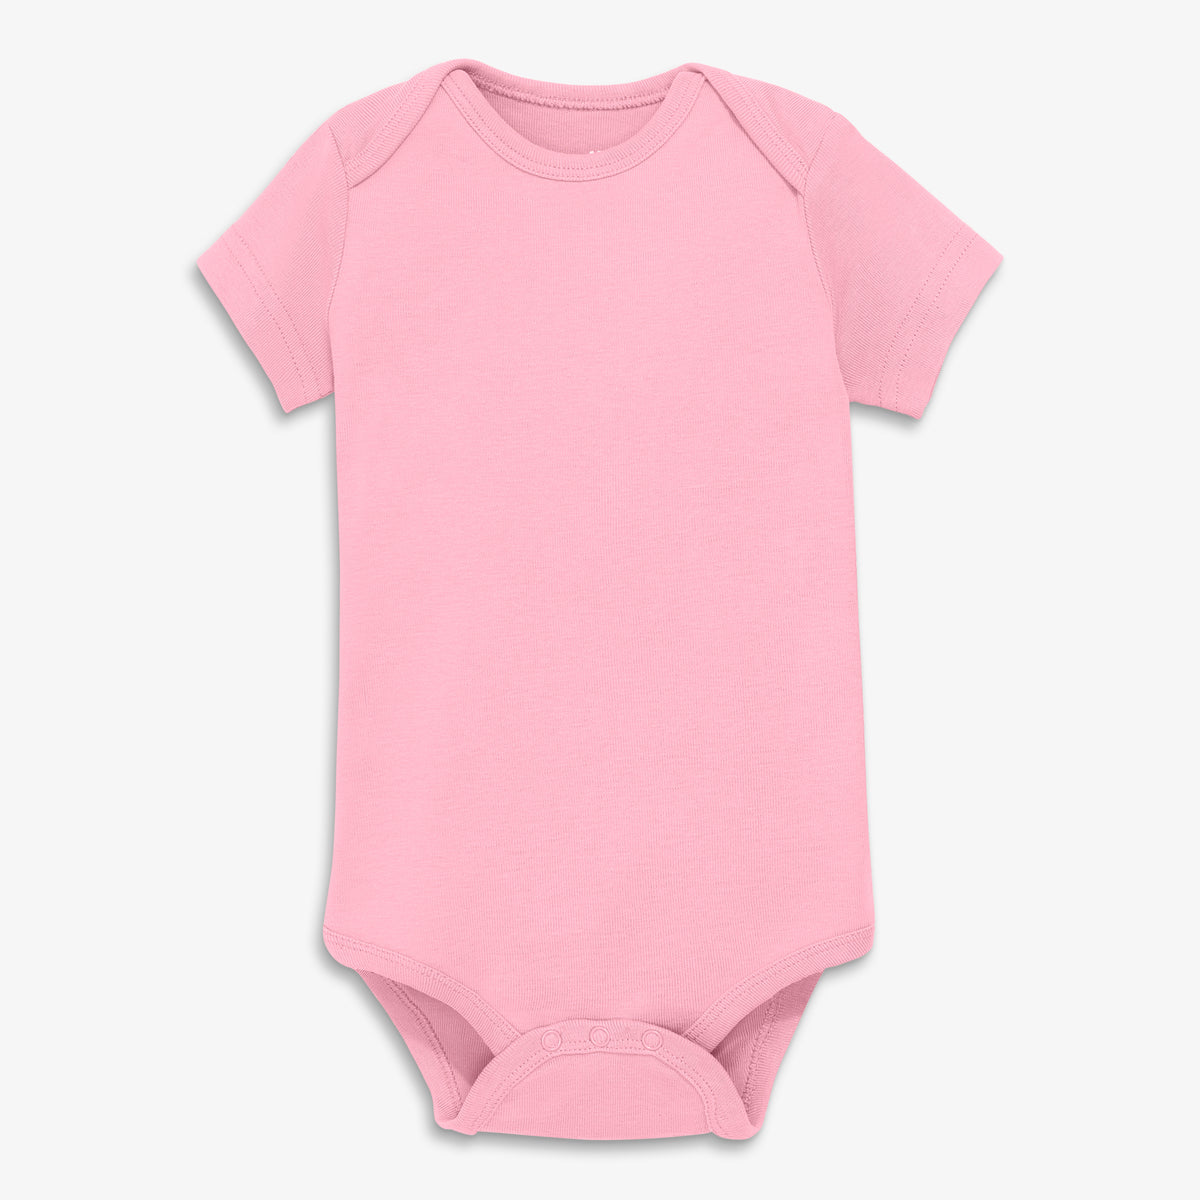 The Organic Short Sleeve Babysuit | Primary.com